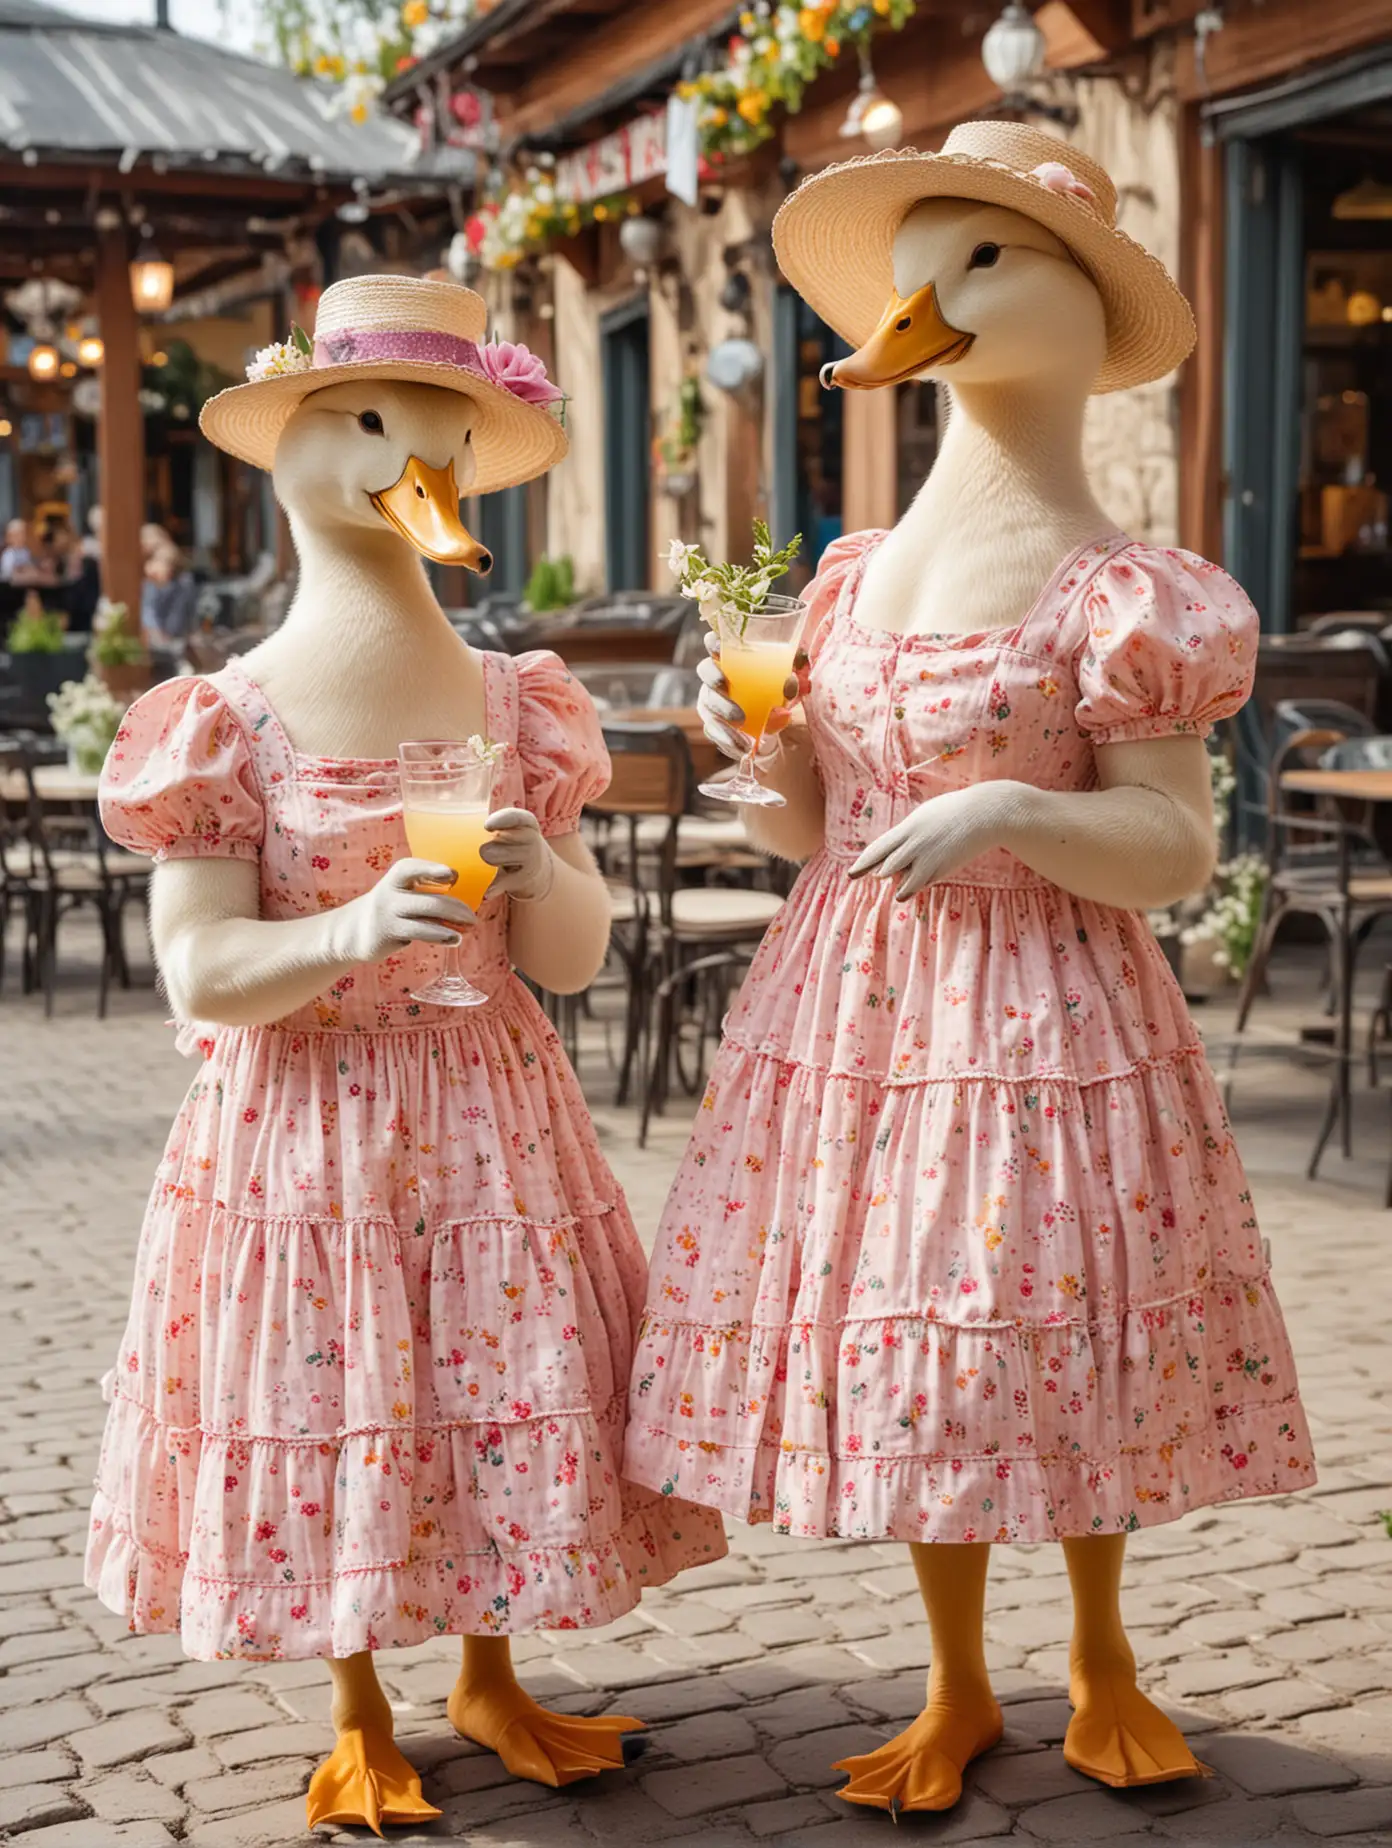 Quirky-Scene-Ducks-in-Sundresses-Enjoying-Cocktails-at-Restaurant